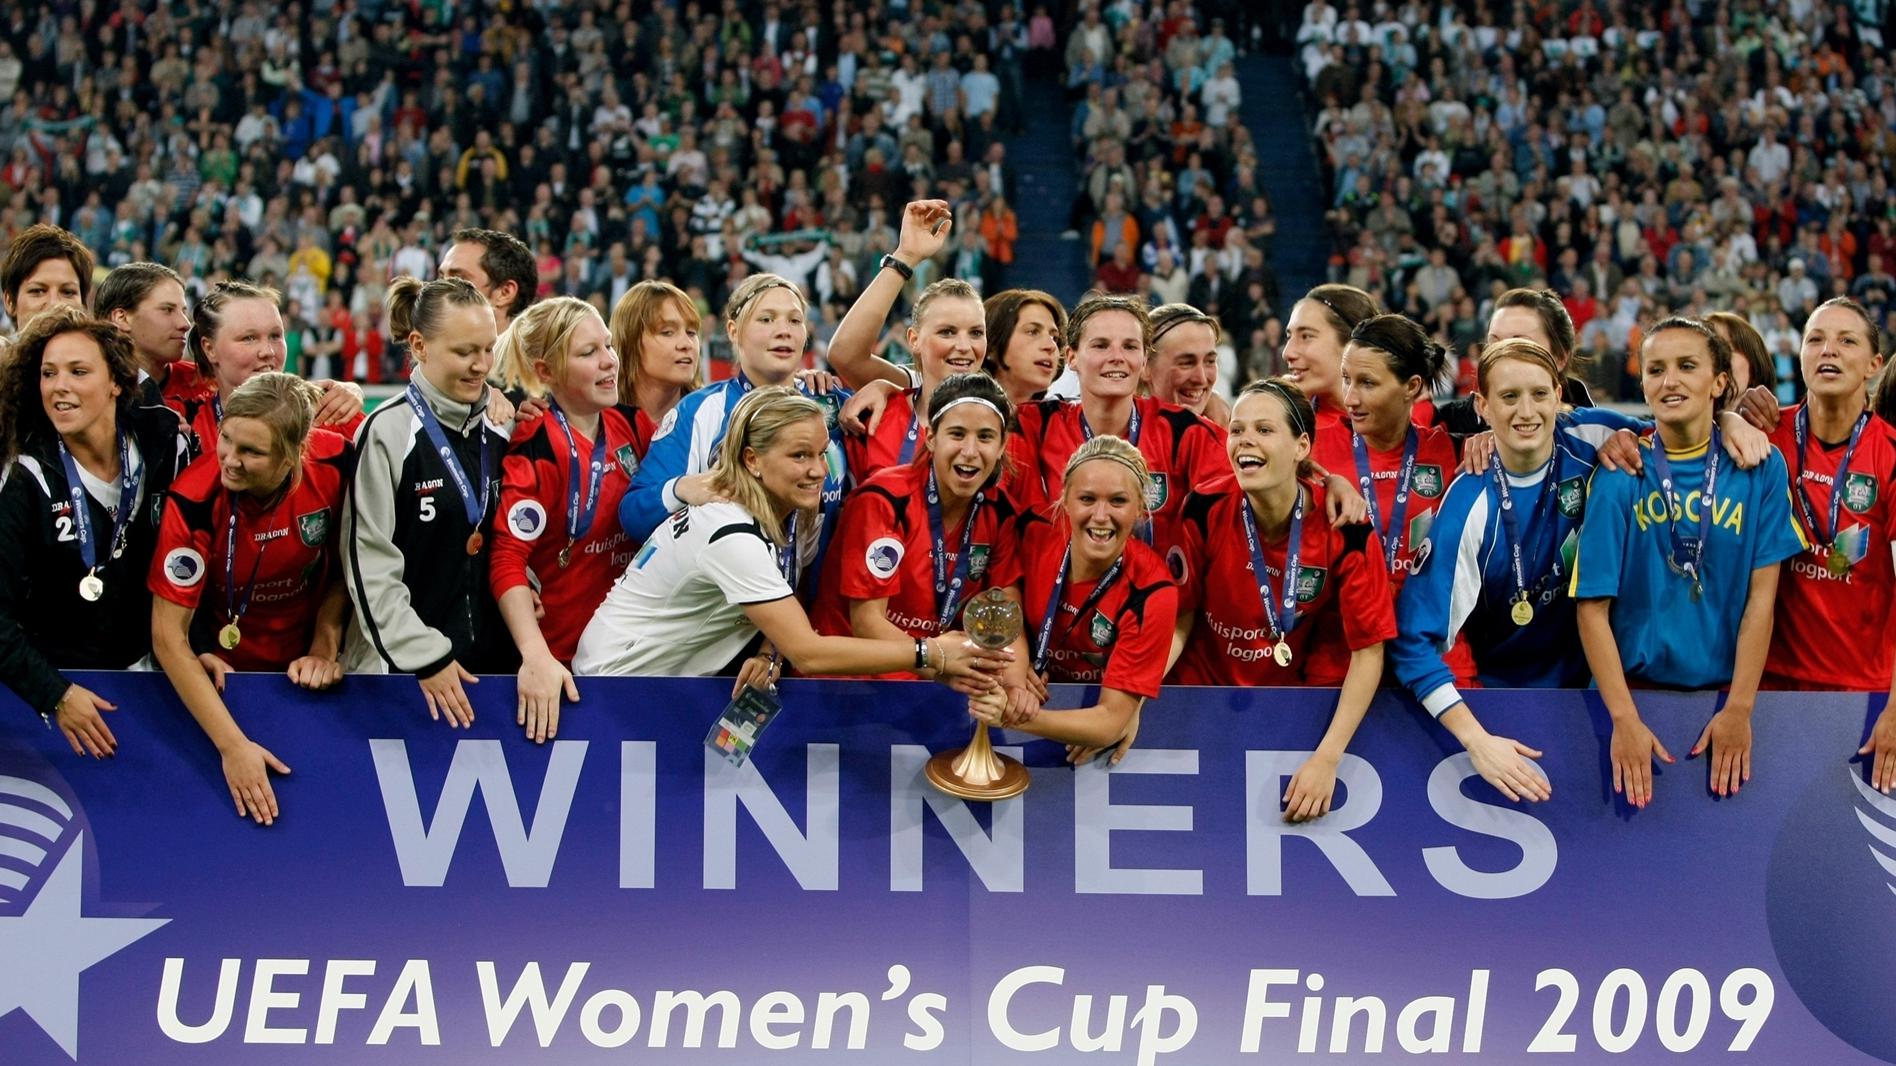 Duisburg lift last UEFA Women's Cup | UEFA Women's ...